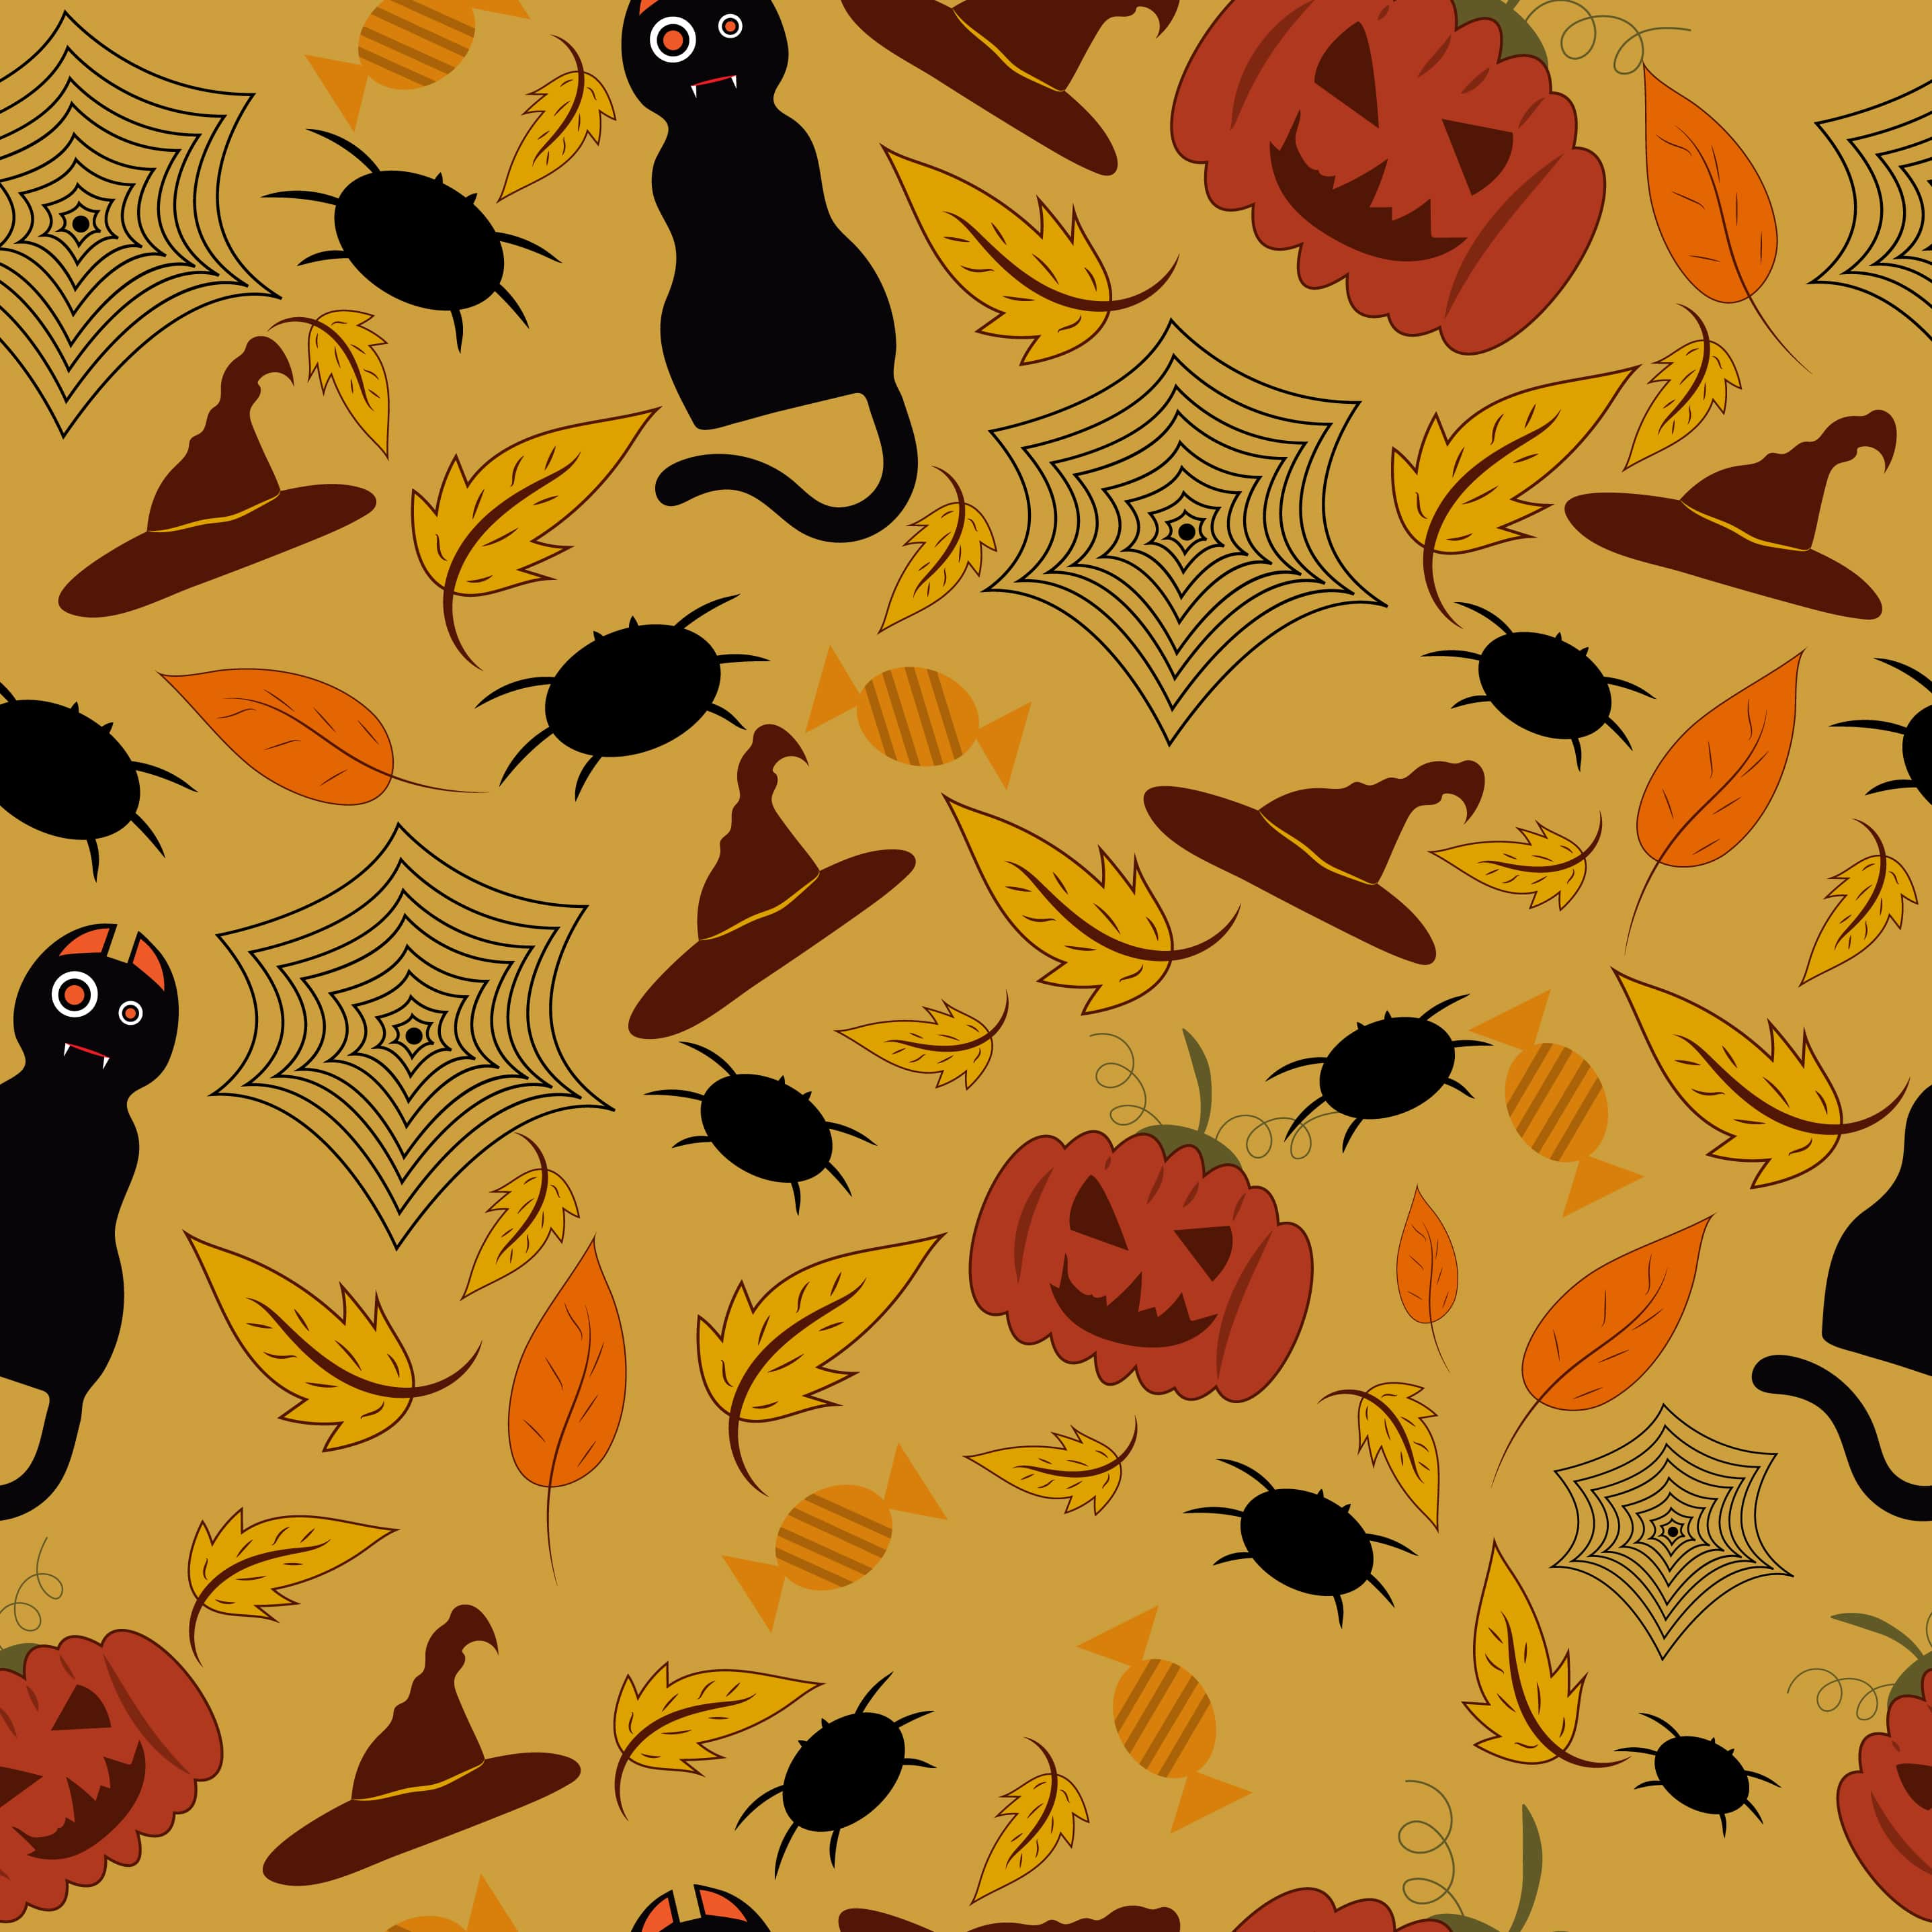 pooky Halloween Seamless Patterns